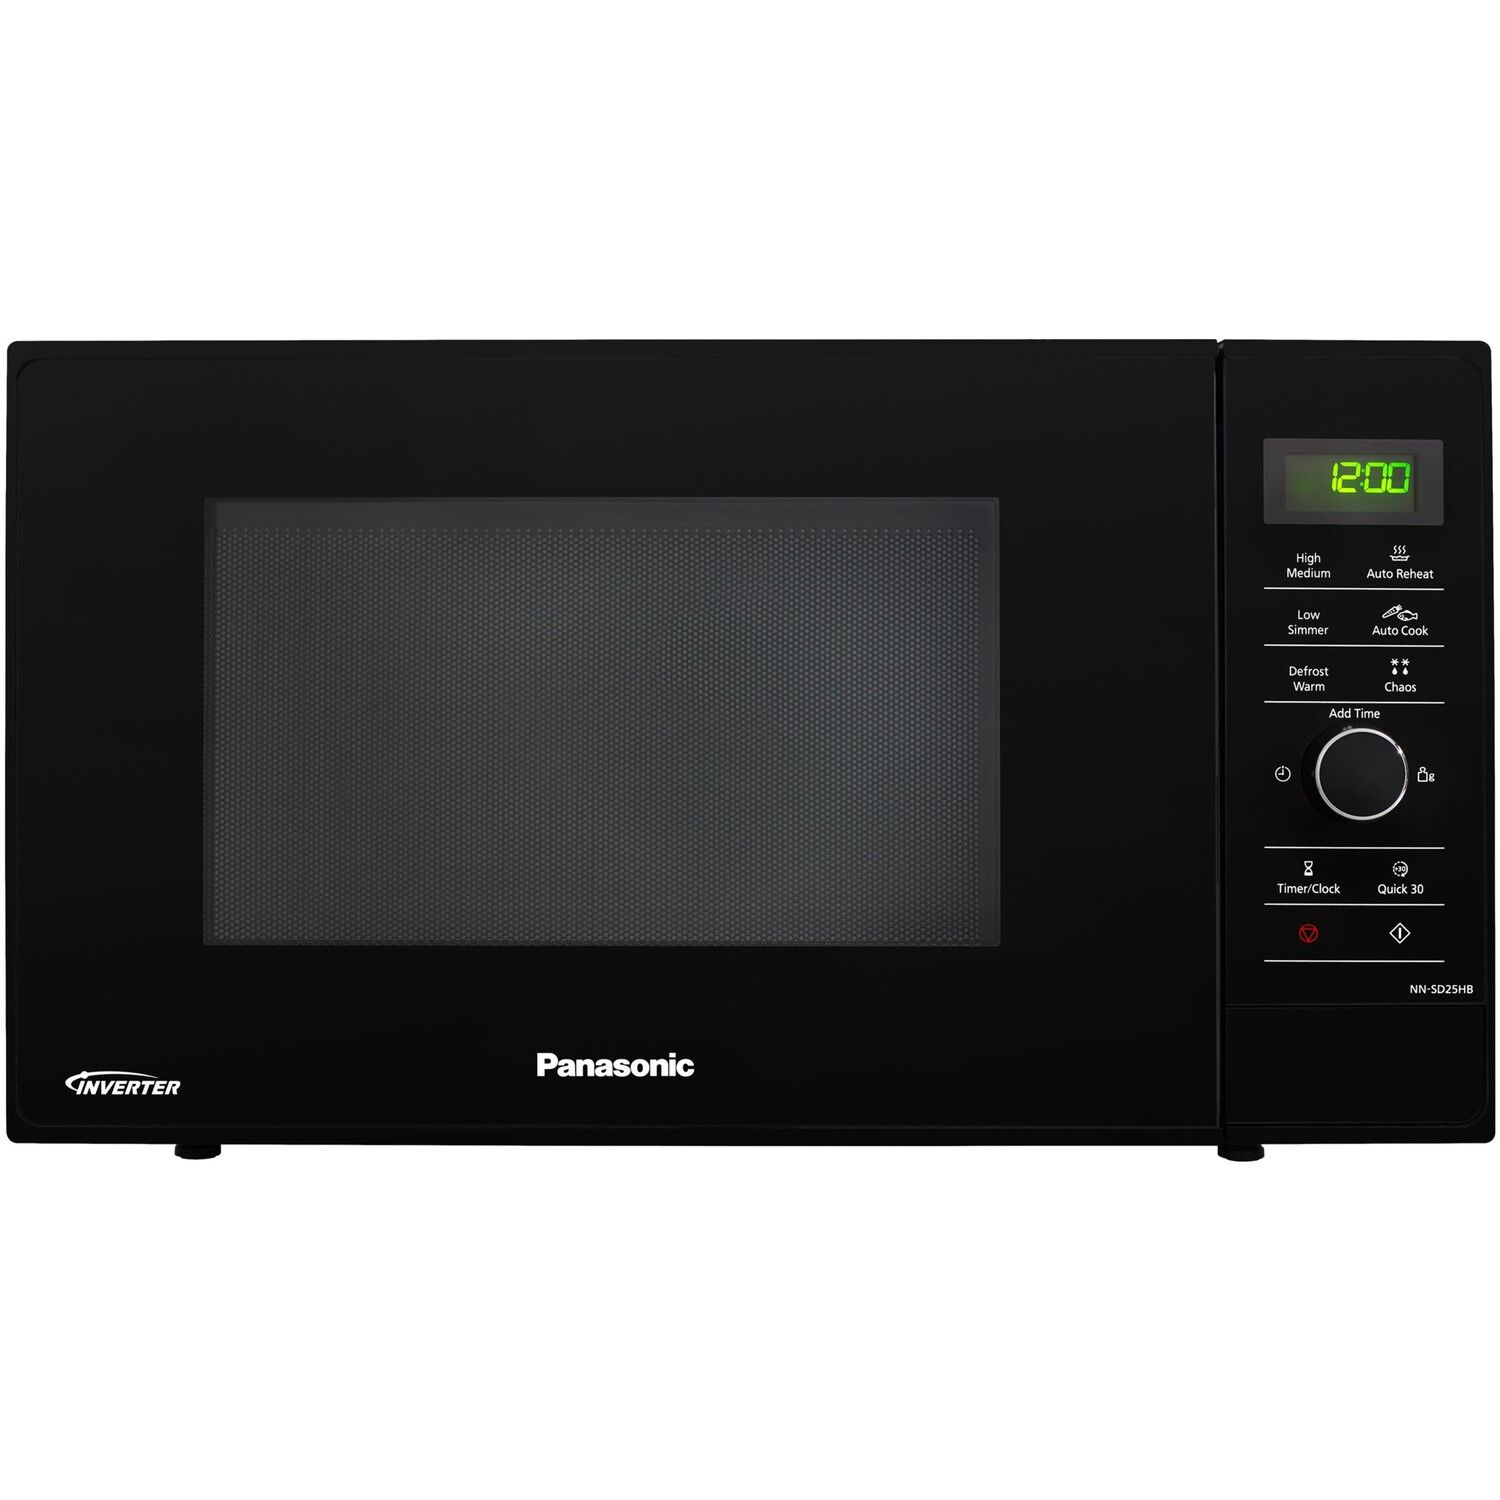 Panasonic 23L Microwave Oven - Black